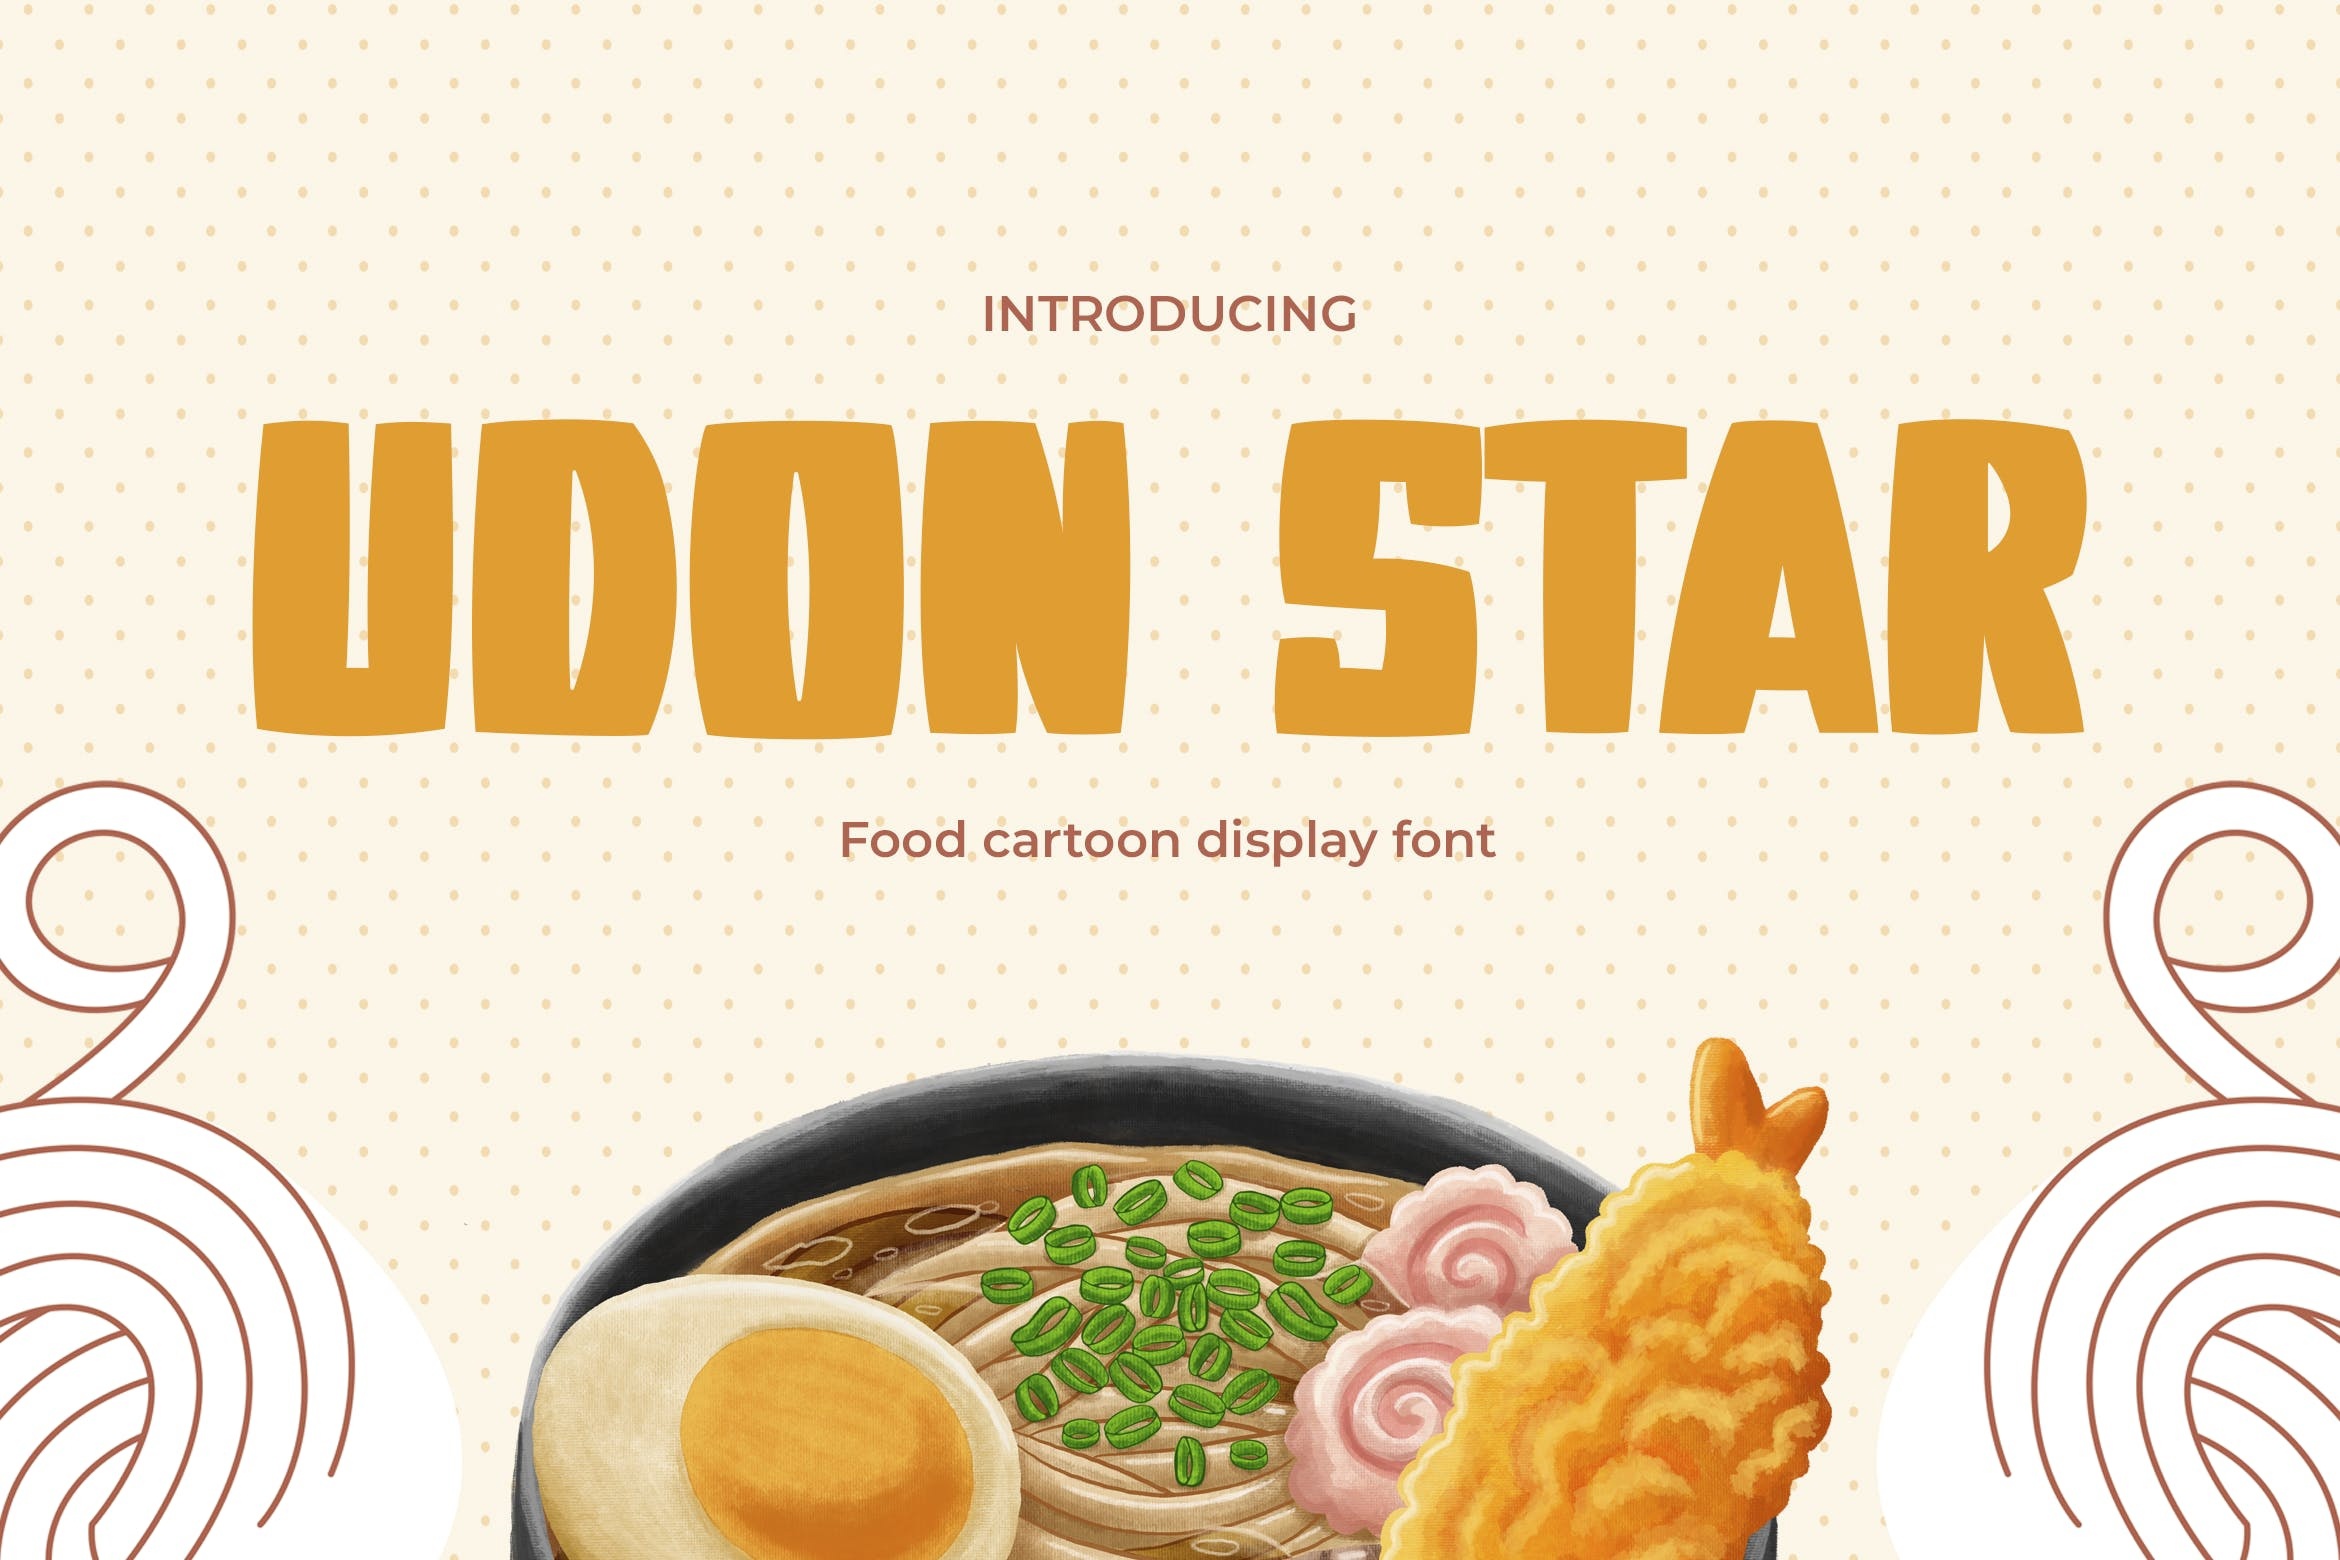 Udon Star Font